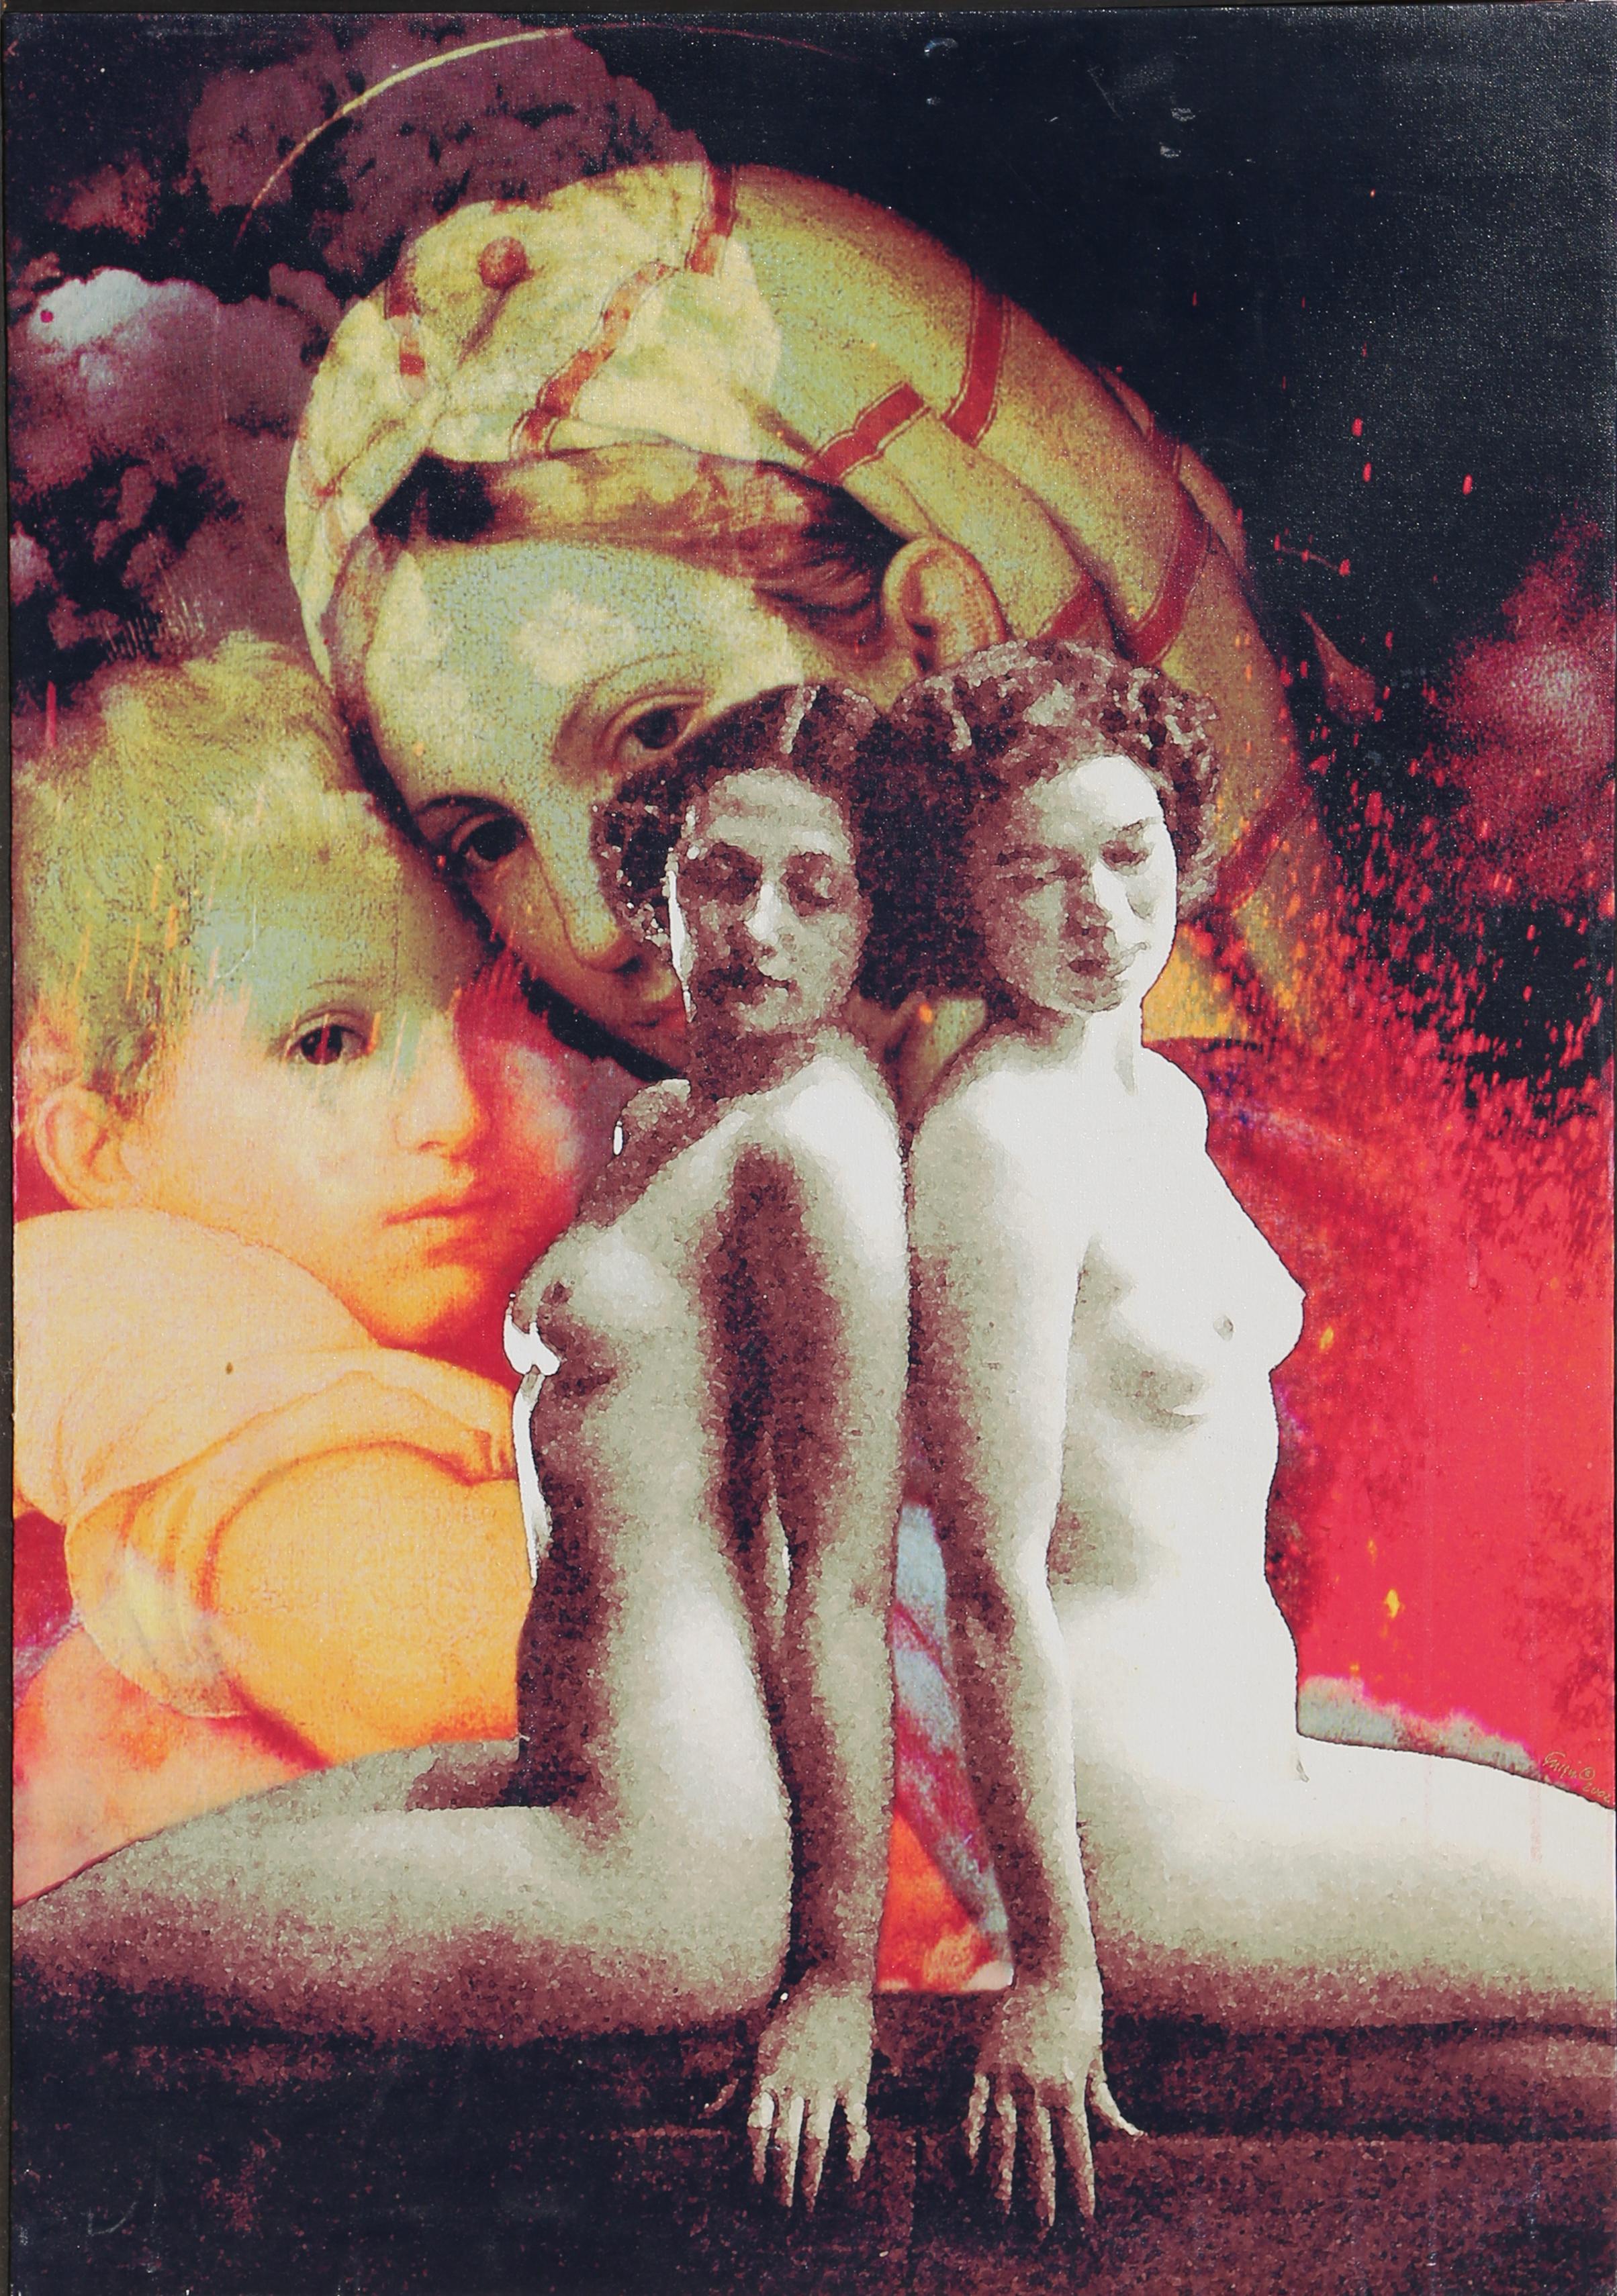 Michael Knigin Nude Print – Kampf um Liebe